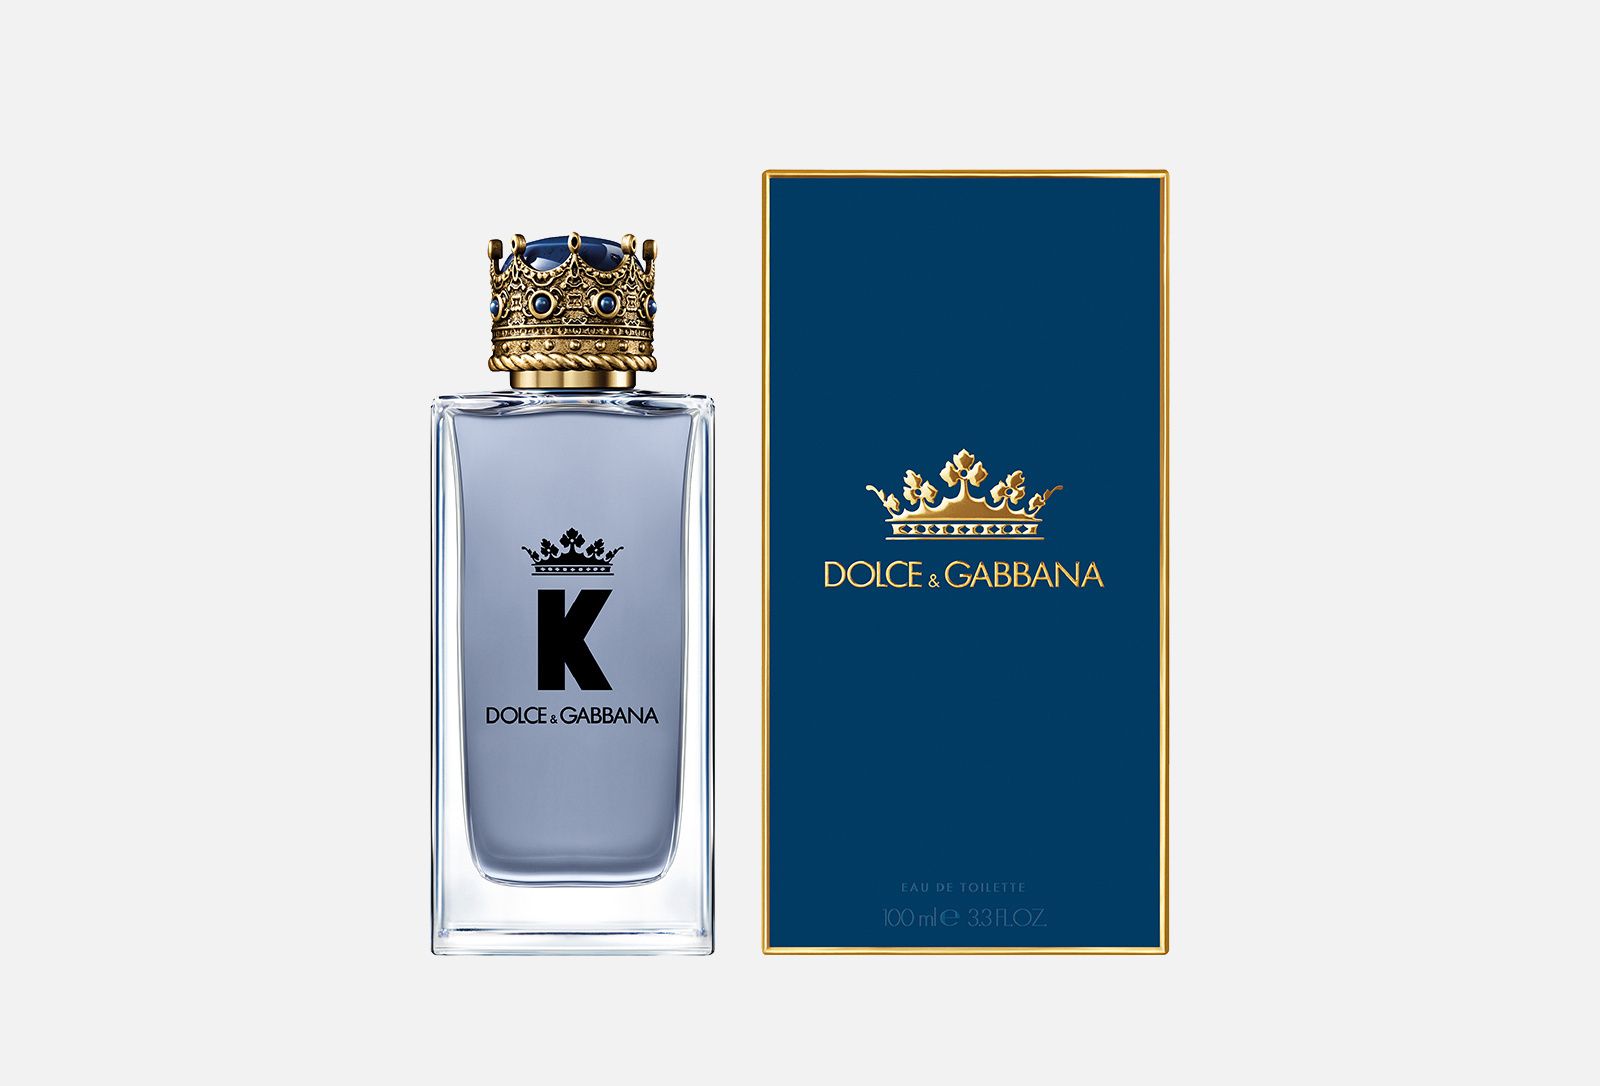 Дольче габбана корона цена. Dolce & Gabbana k for men 100 мл. Dolce Gabbana k 50ml. Dolce & Gabbana k m EDT 50 ml. Туалетная вода Dolce & Gabbana king100 ml.